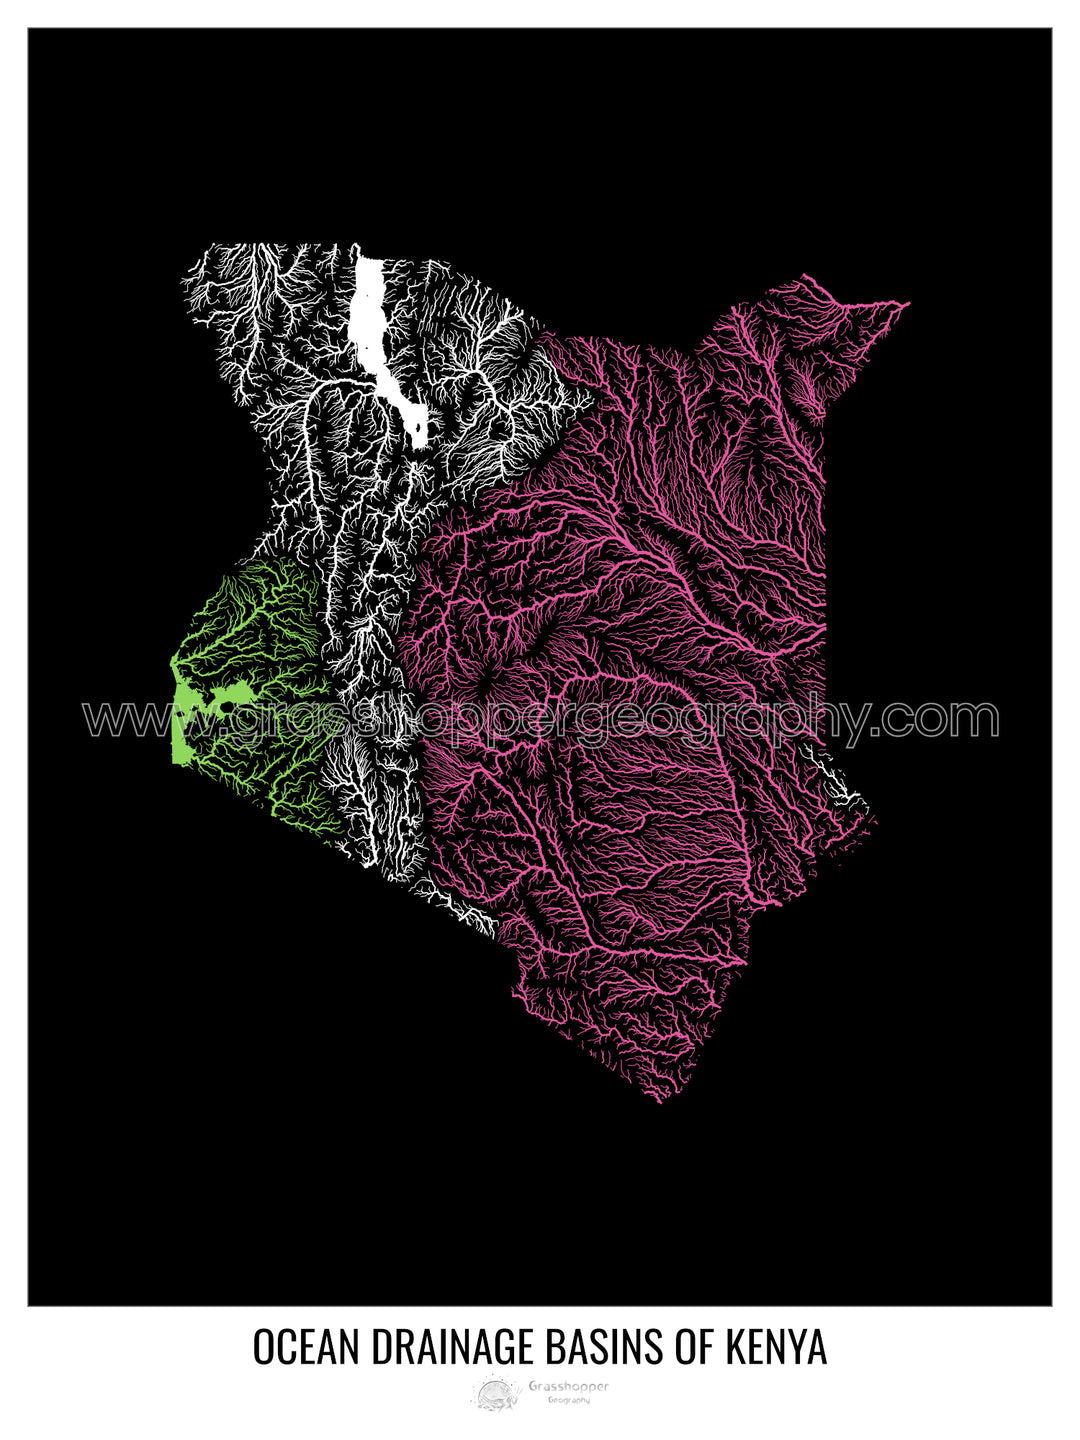 Kenya - Ocean drainage basin map, black v1 - Framed Print